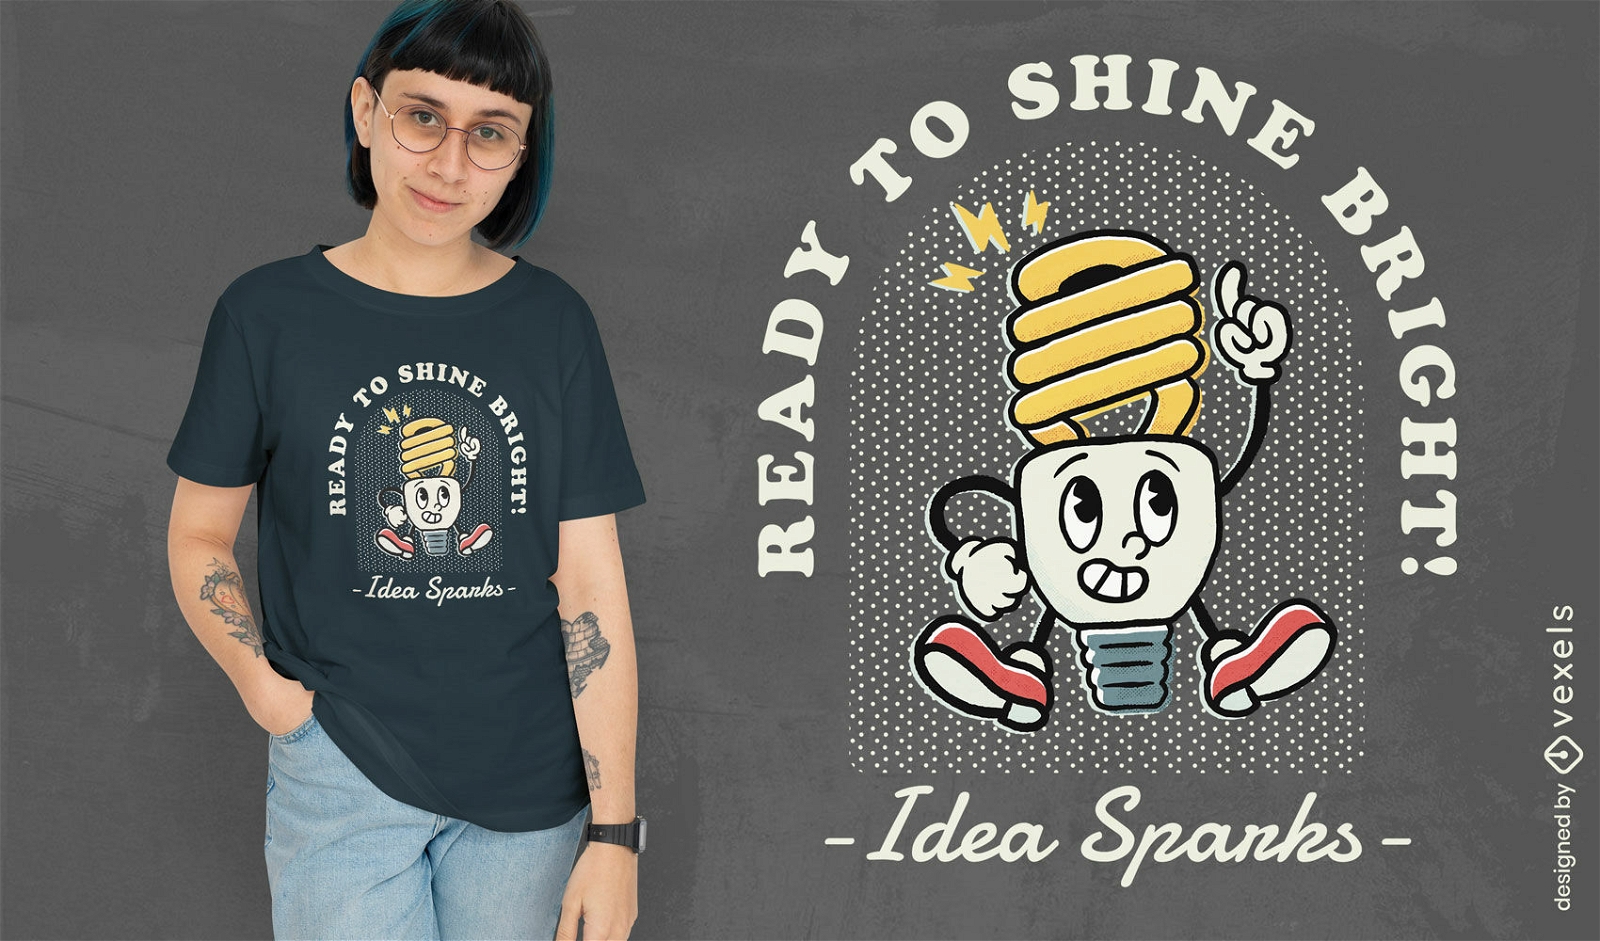 Kreative Idee, Glühbirnen-T-Shirt-Design